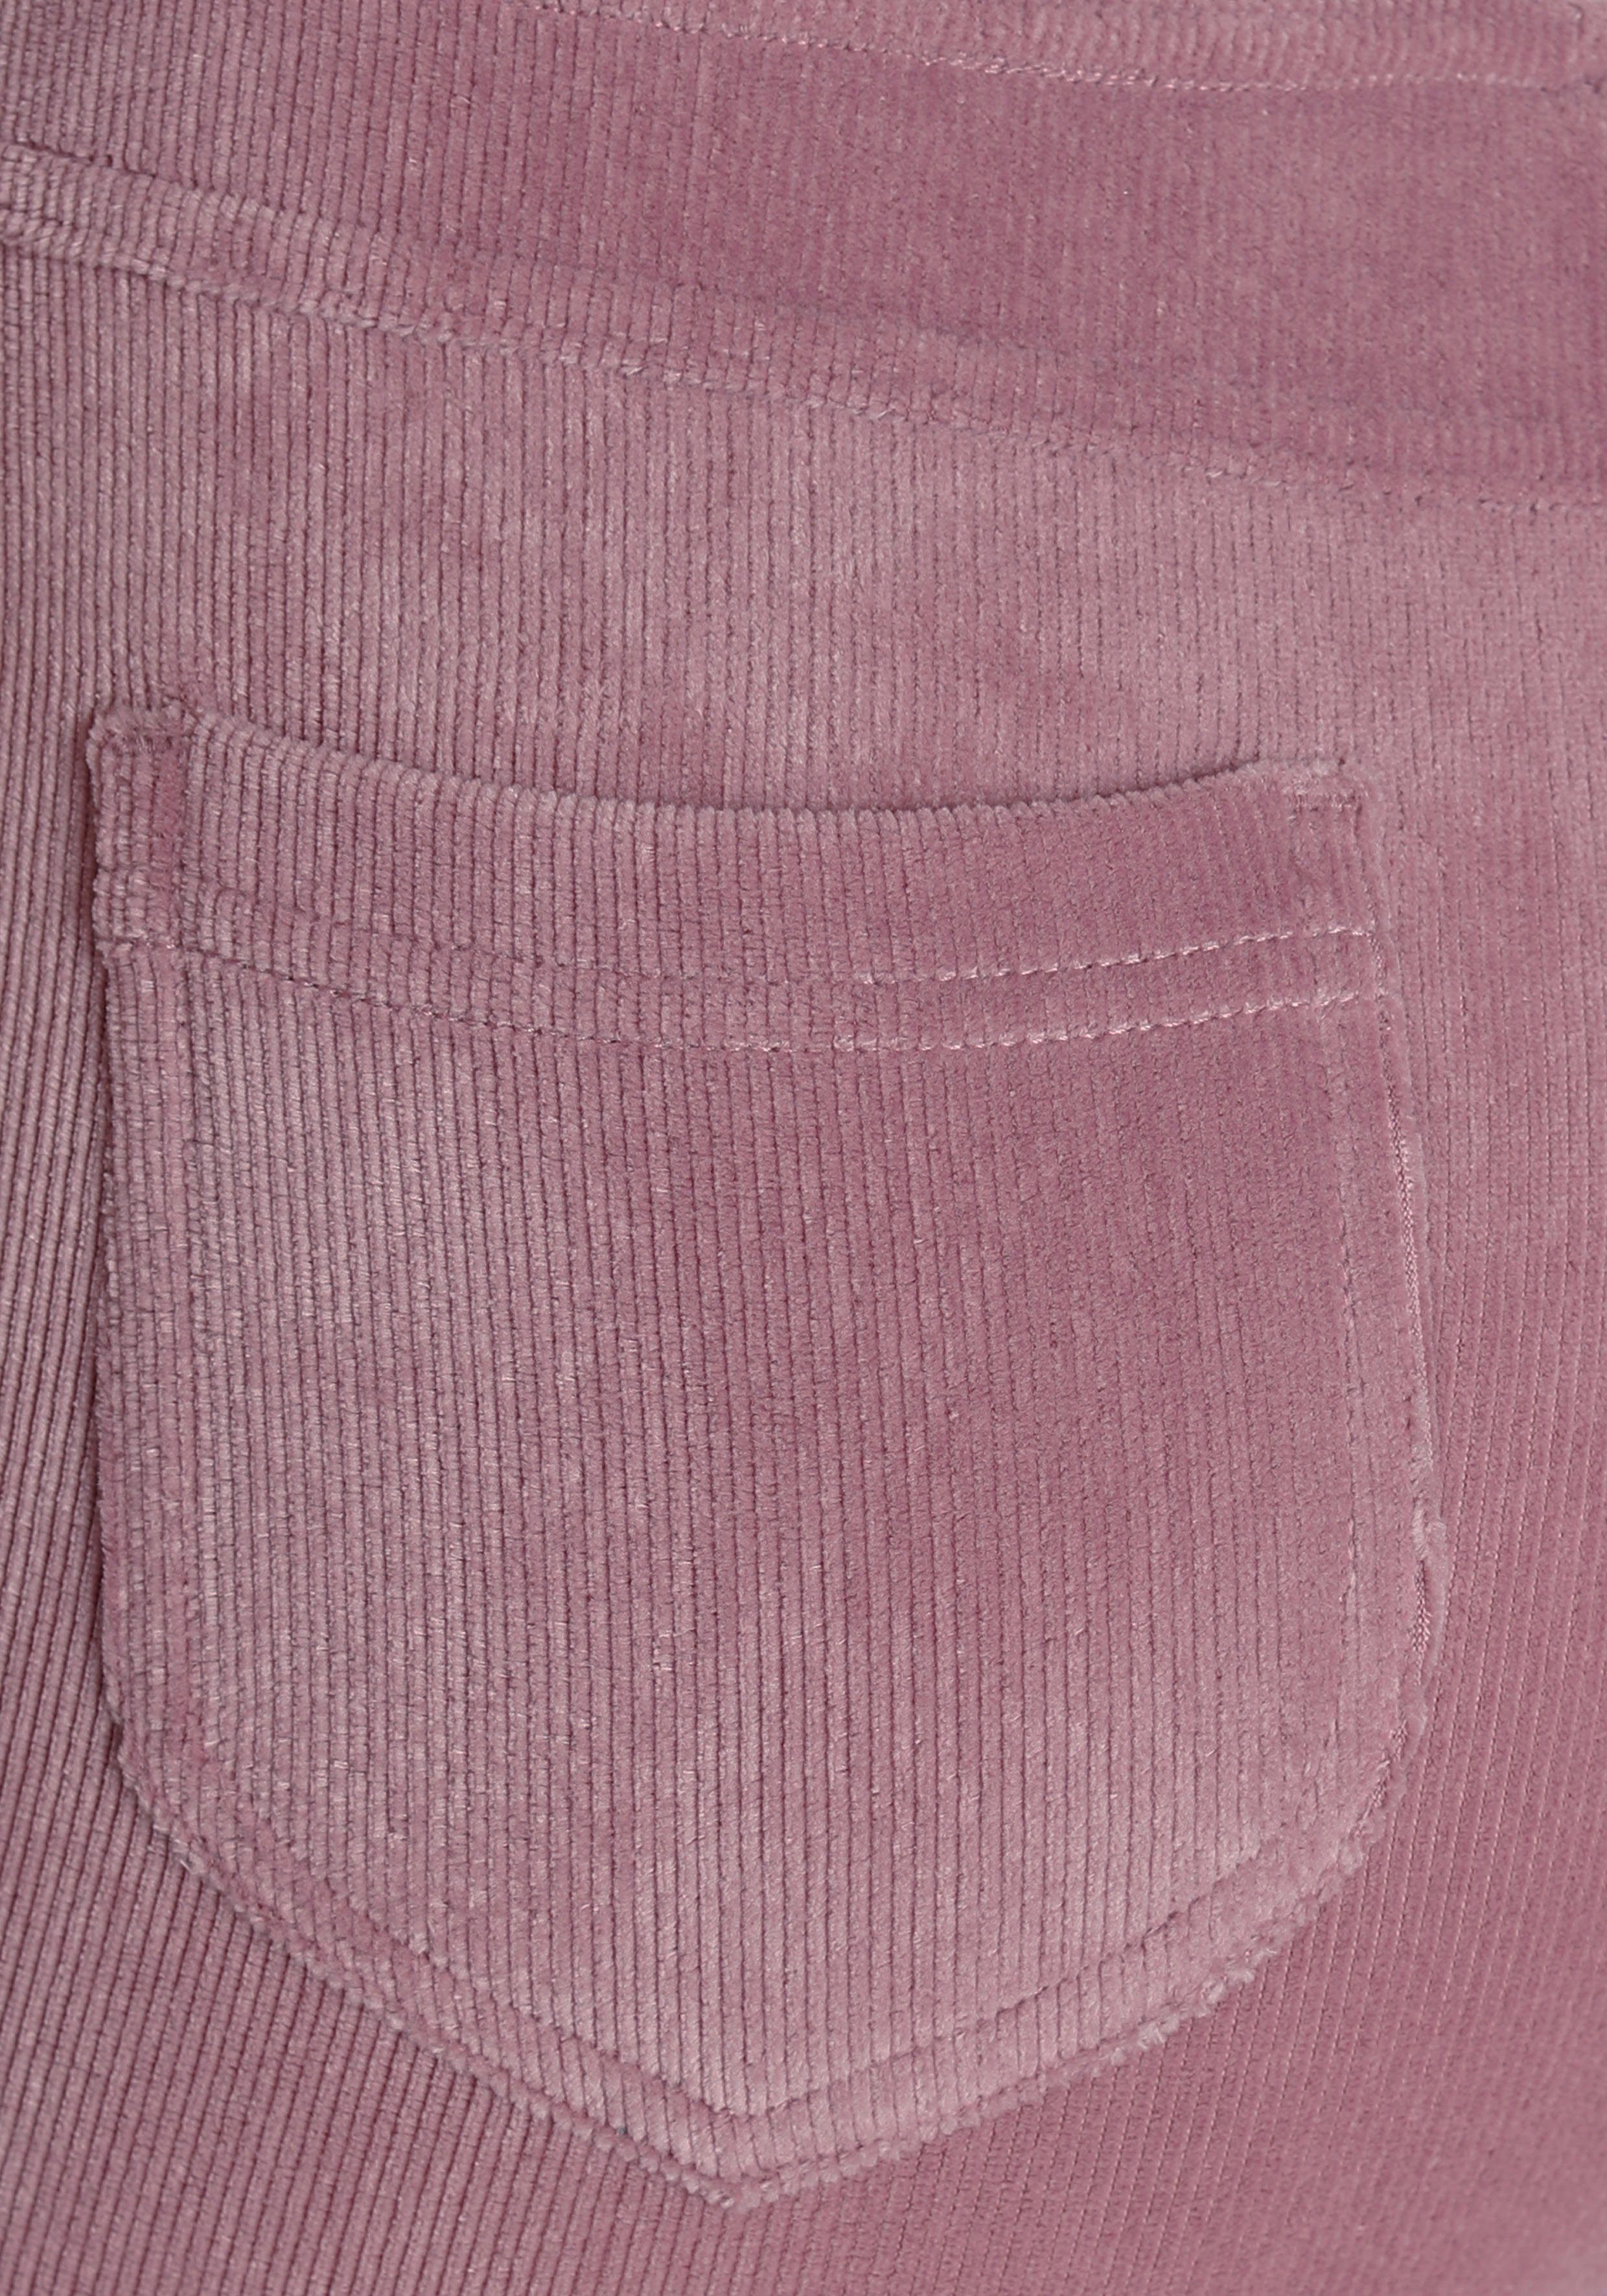 LASCANA Jazzpants Cord-Optik, Material Loungewear in rosa weichem aus